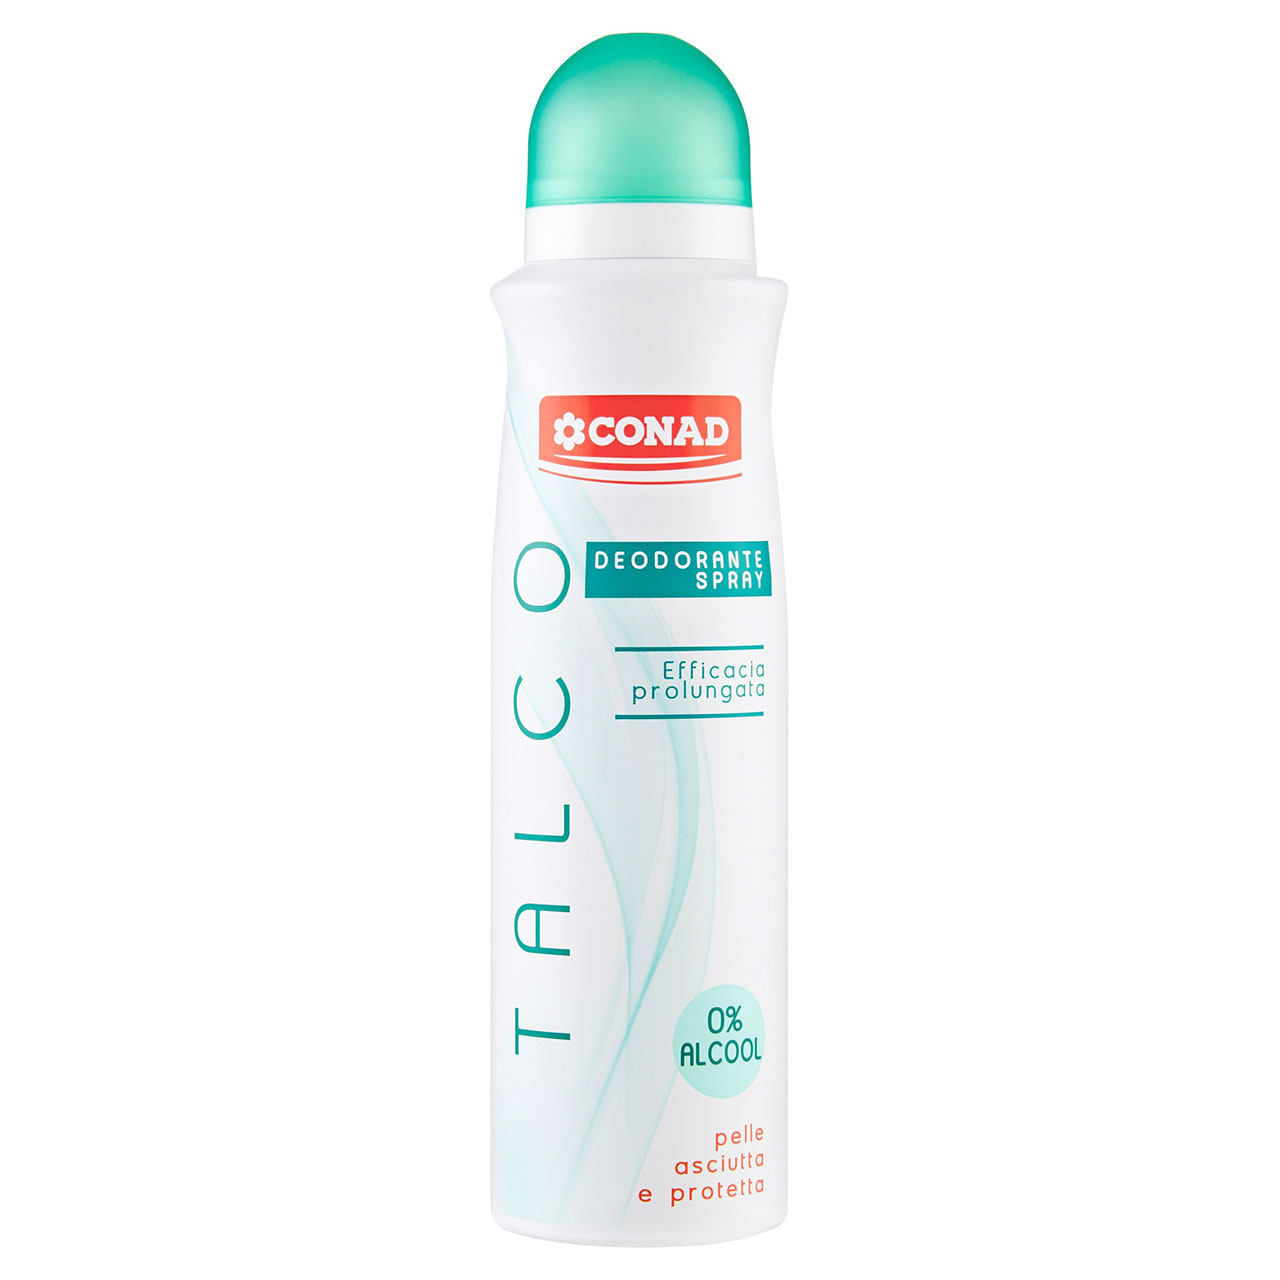 Deodorante Spray Talco 150 ml Conad vendita online